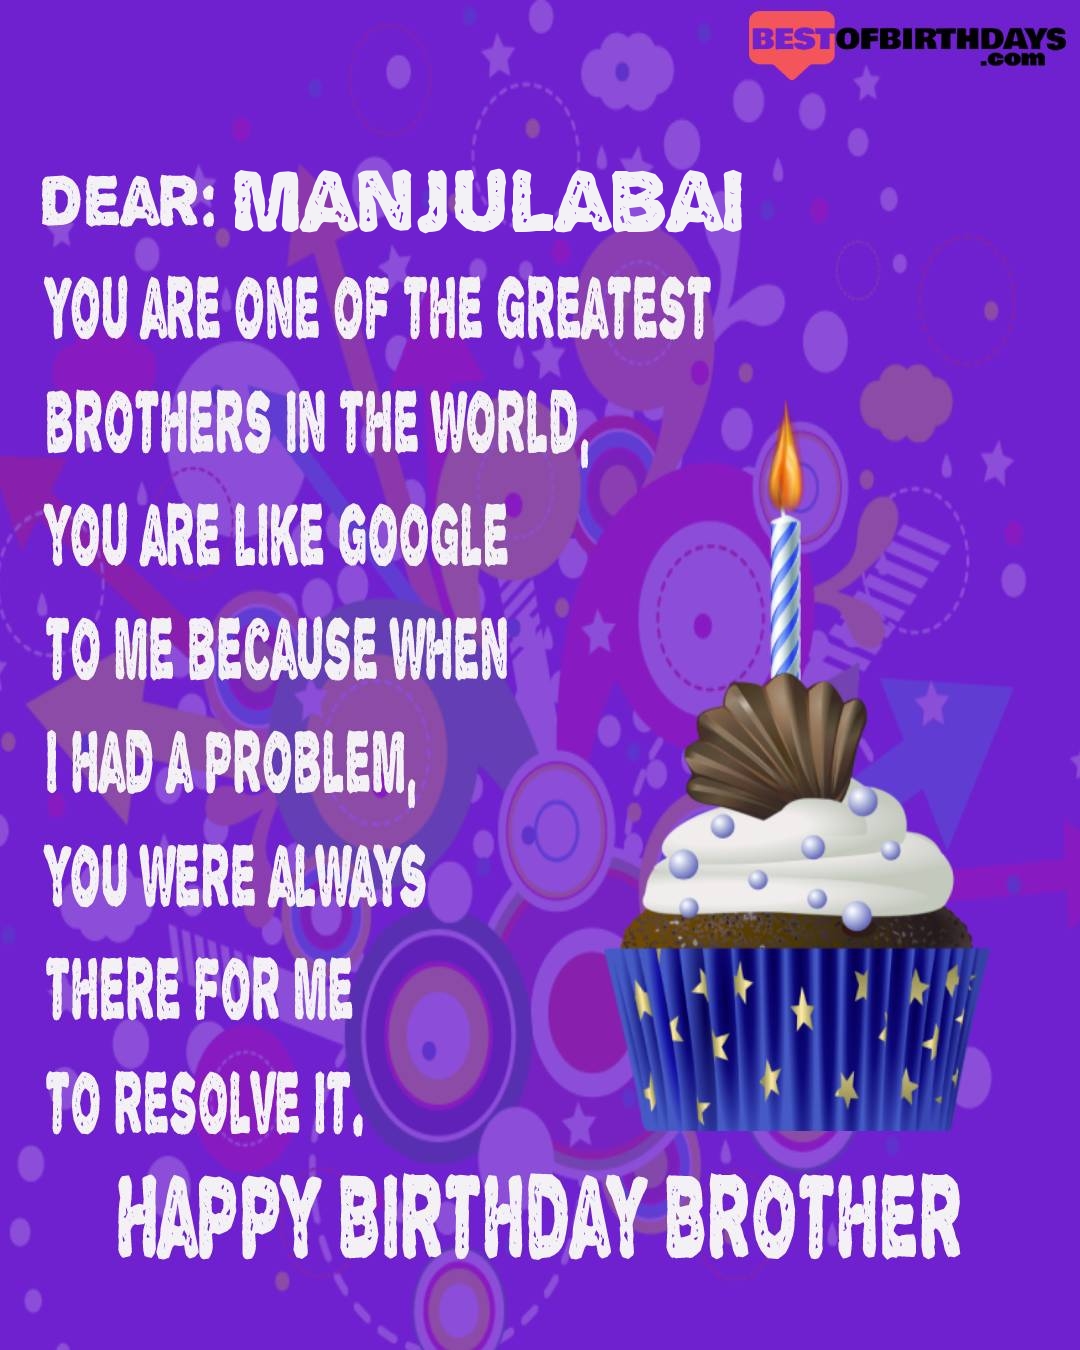 Happy birthday manjulabai bhai brother bro